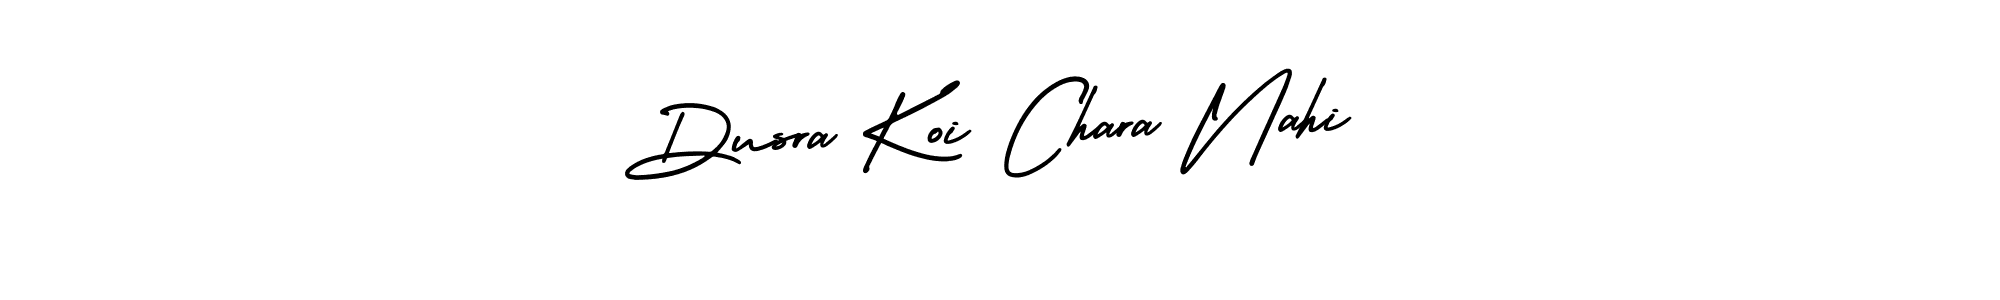 Best and Professional Signature Style for Dusra Koi Chara Nahi. AmerikaSignatureDemo-Regular Best Signature Style Collection. Dusra Koi Chara Nahi signature style 3 images and pictures png